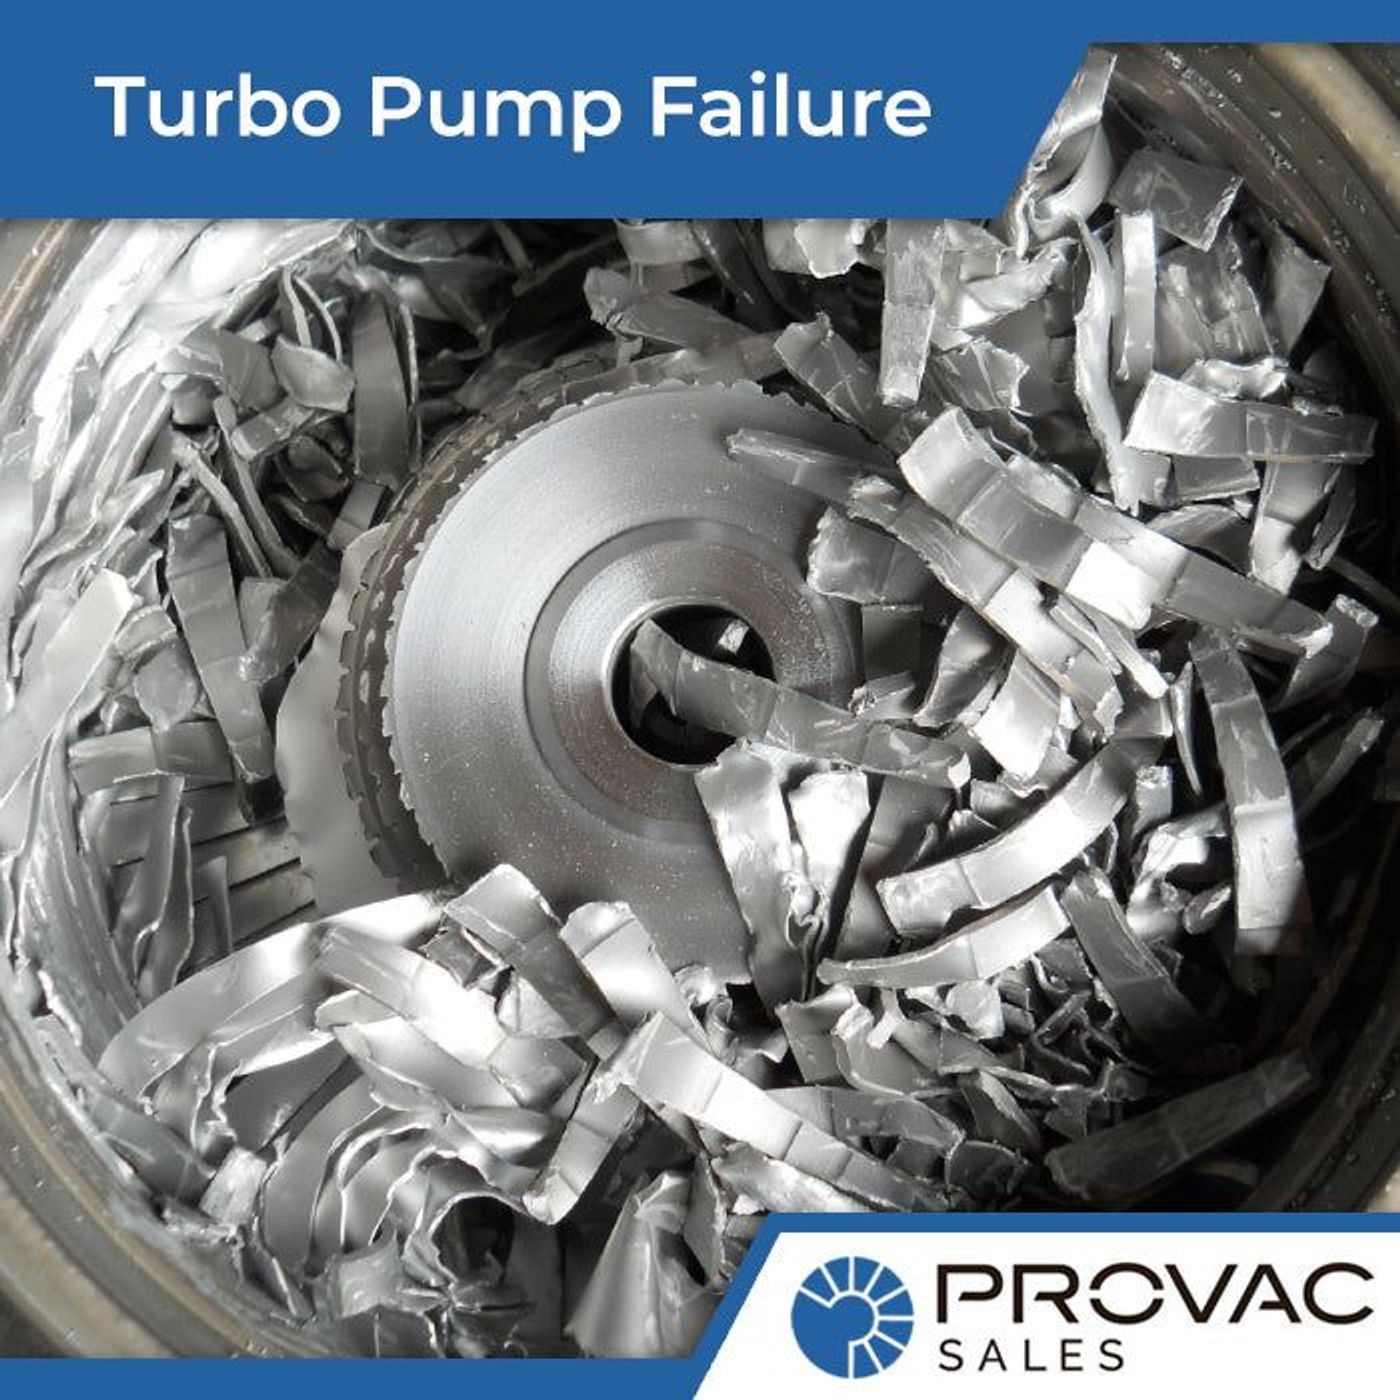 Turbo Pump Failure